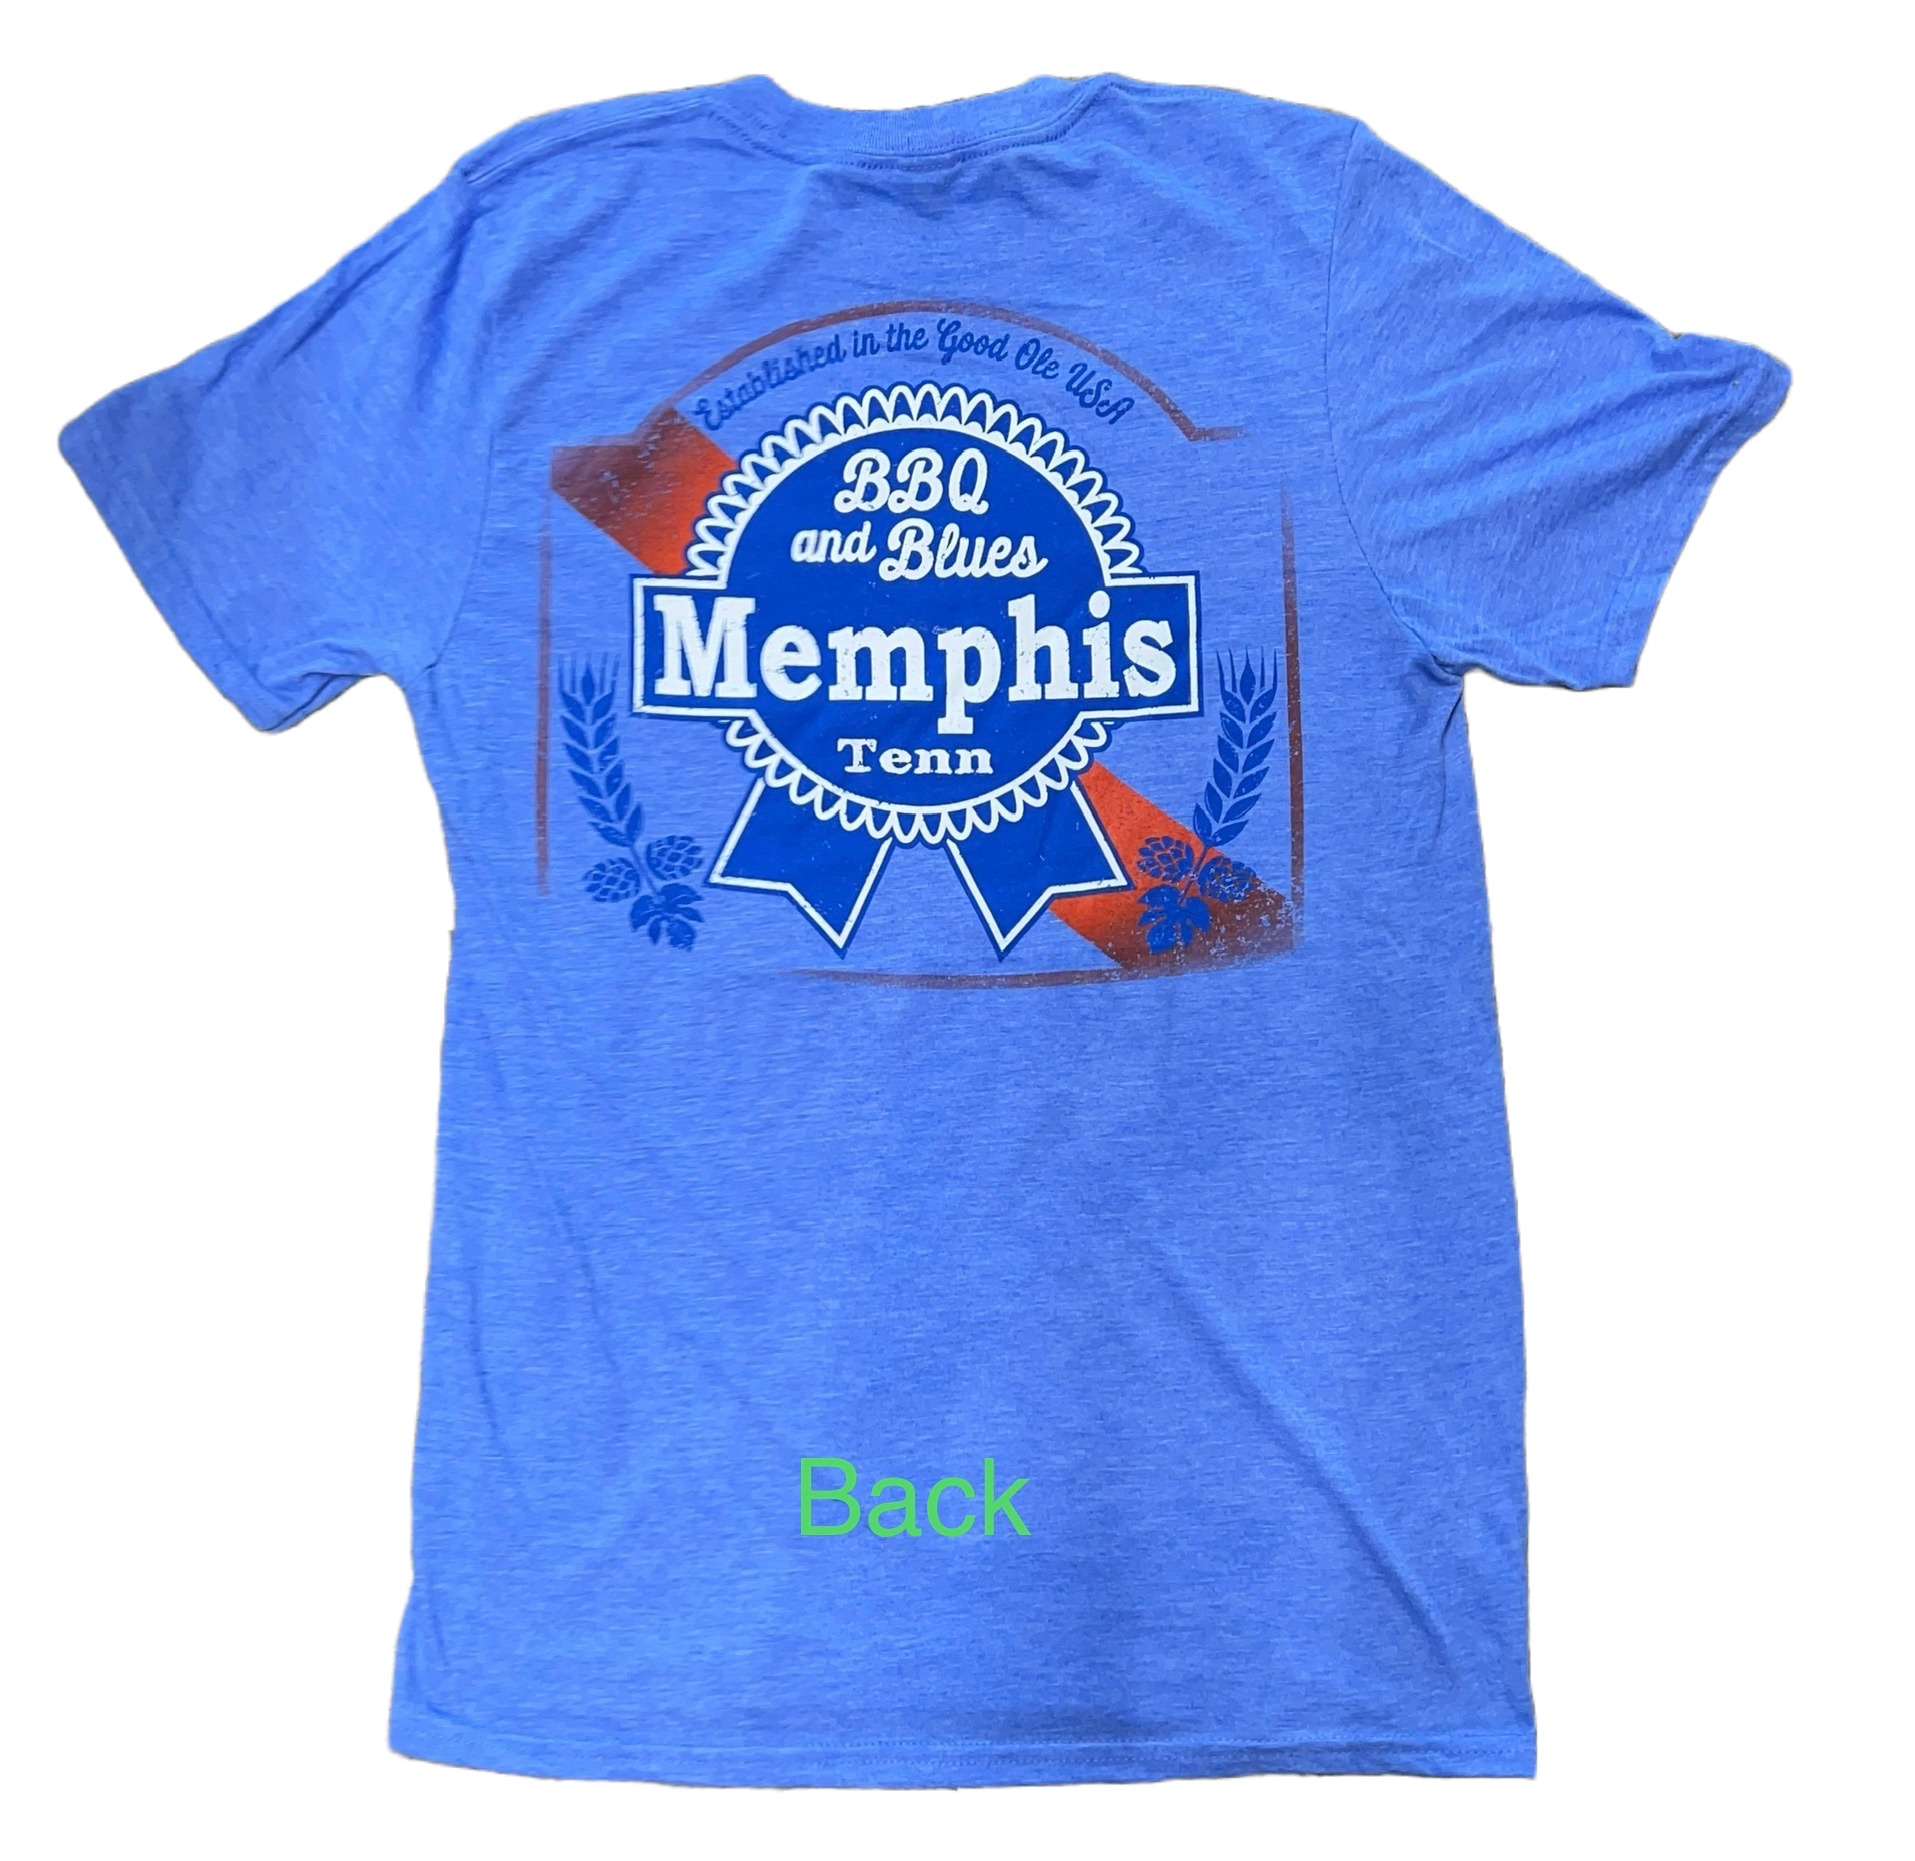 T-Shirt Memphis Retro Beer Logo Ribbon